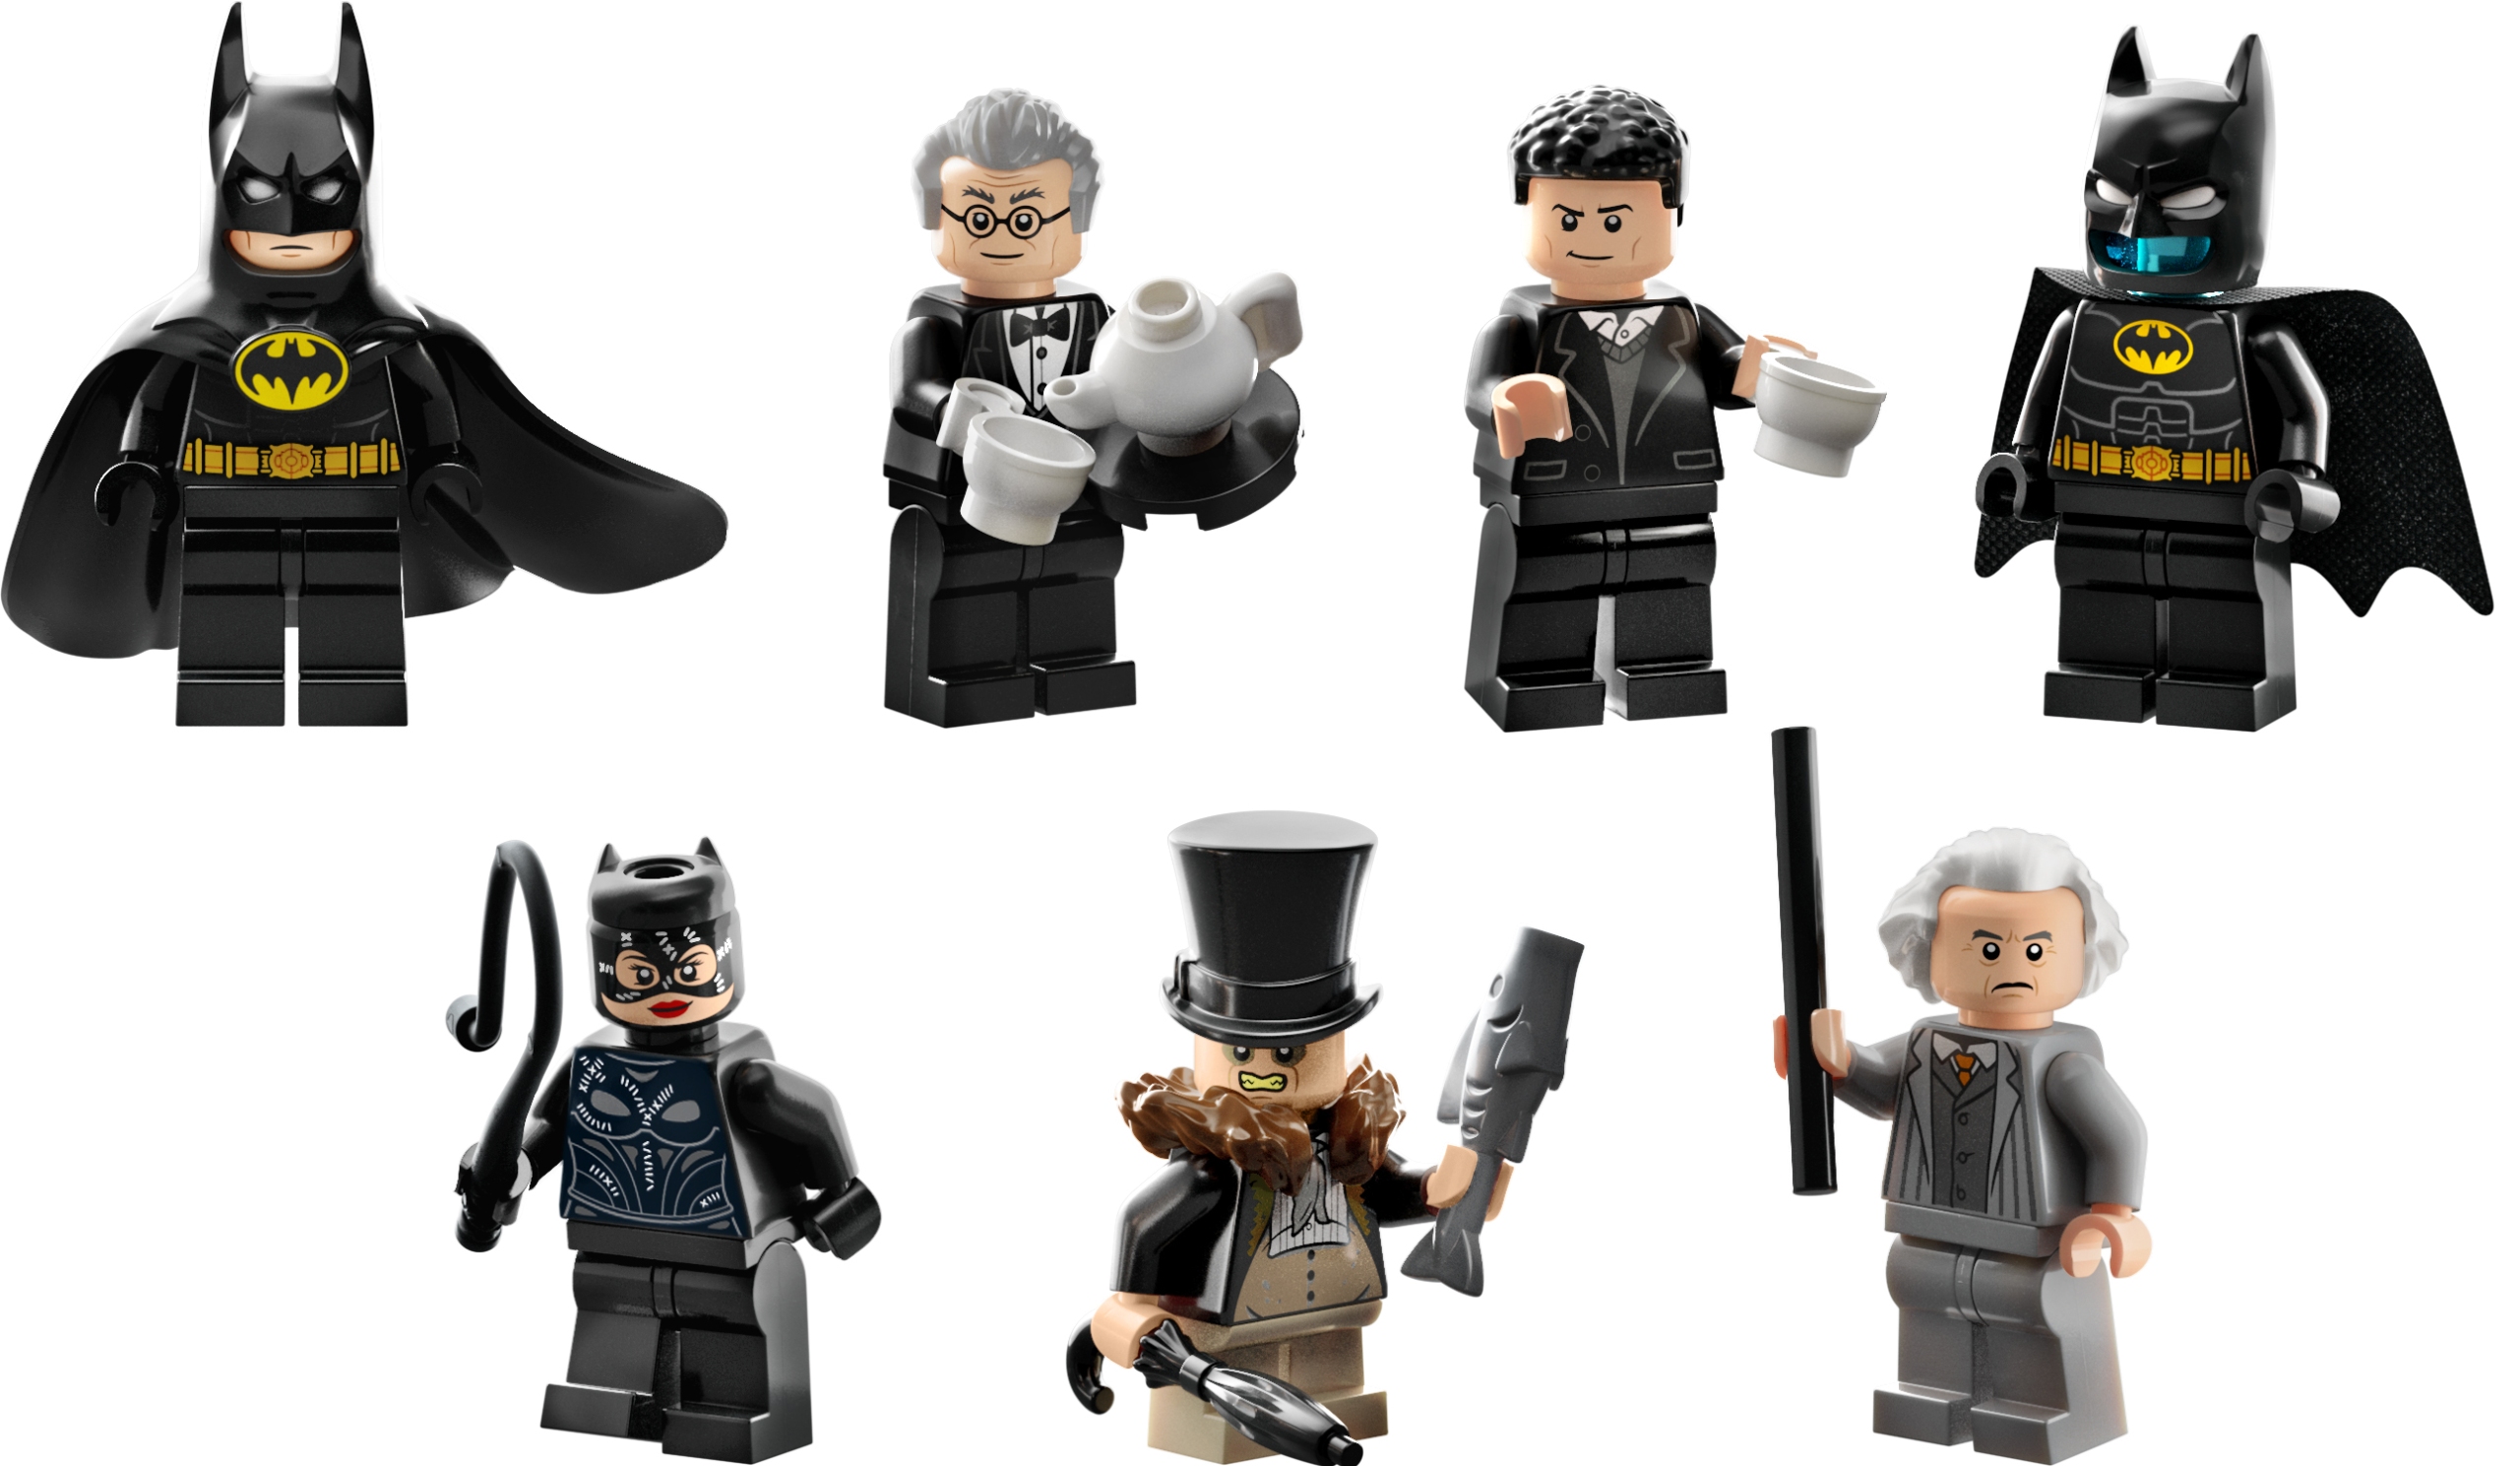 LEGO IDEAS - Batcave from Batman Begins